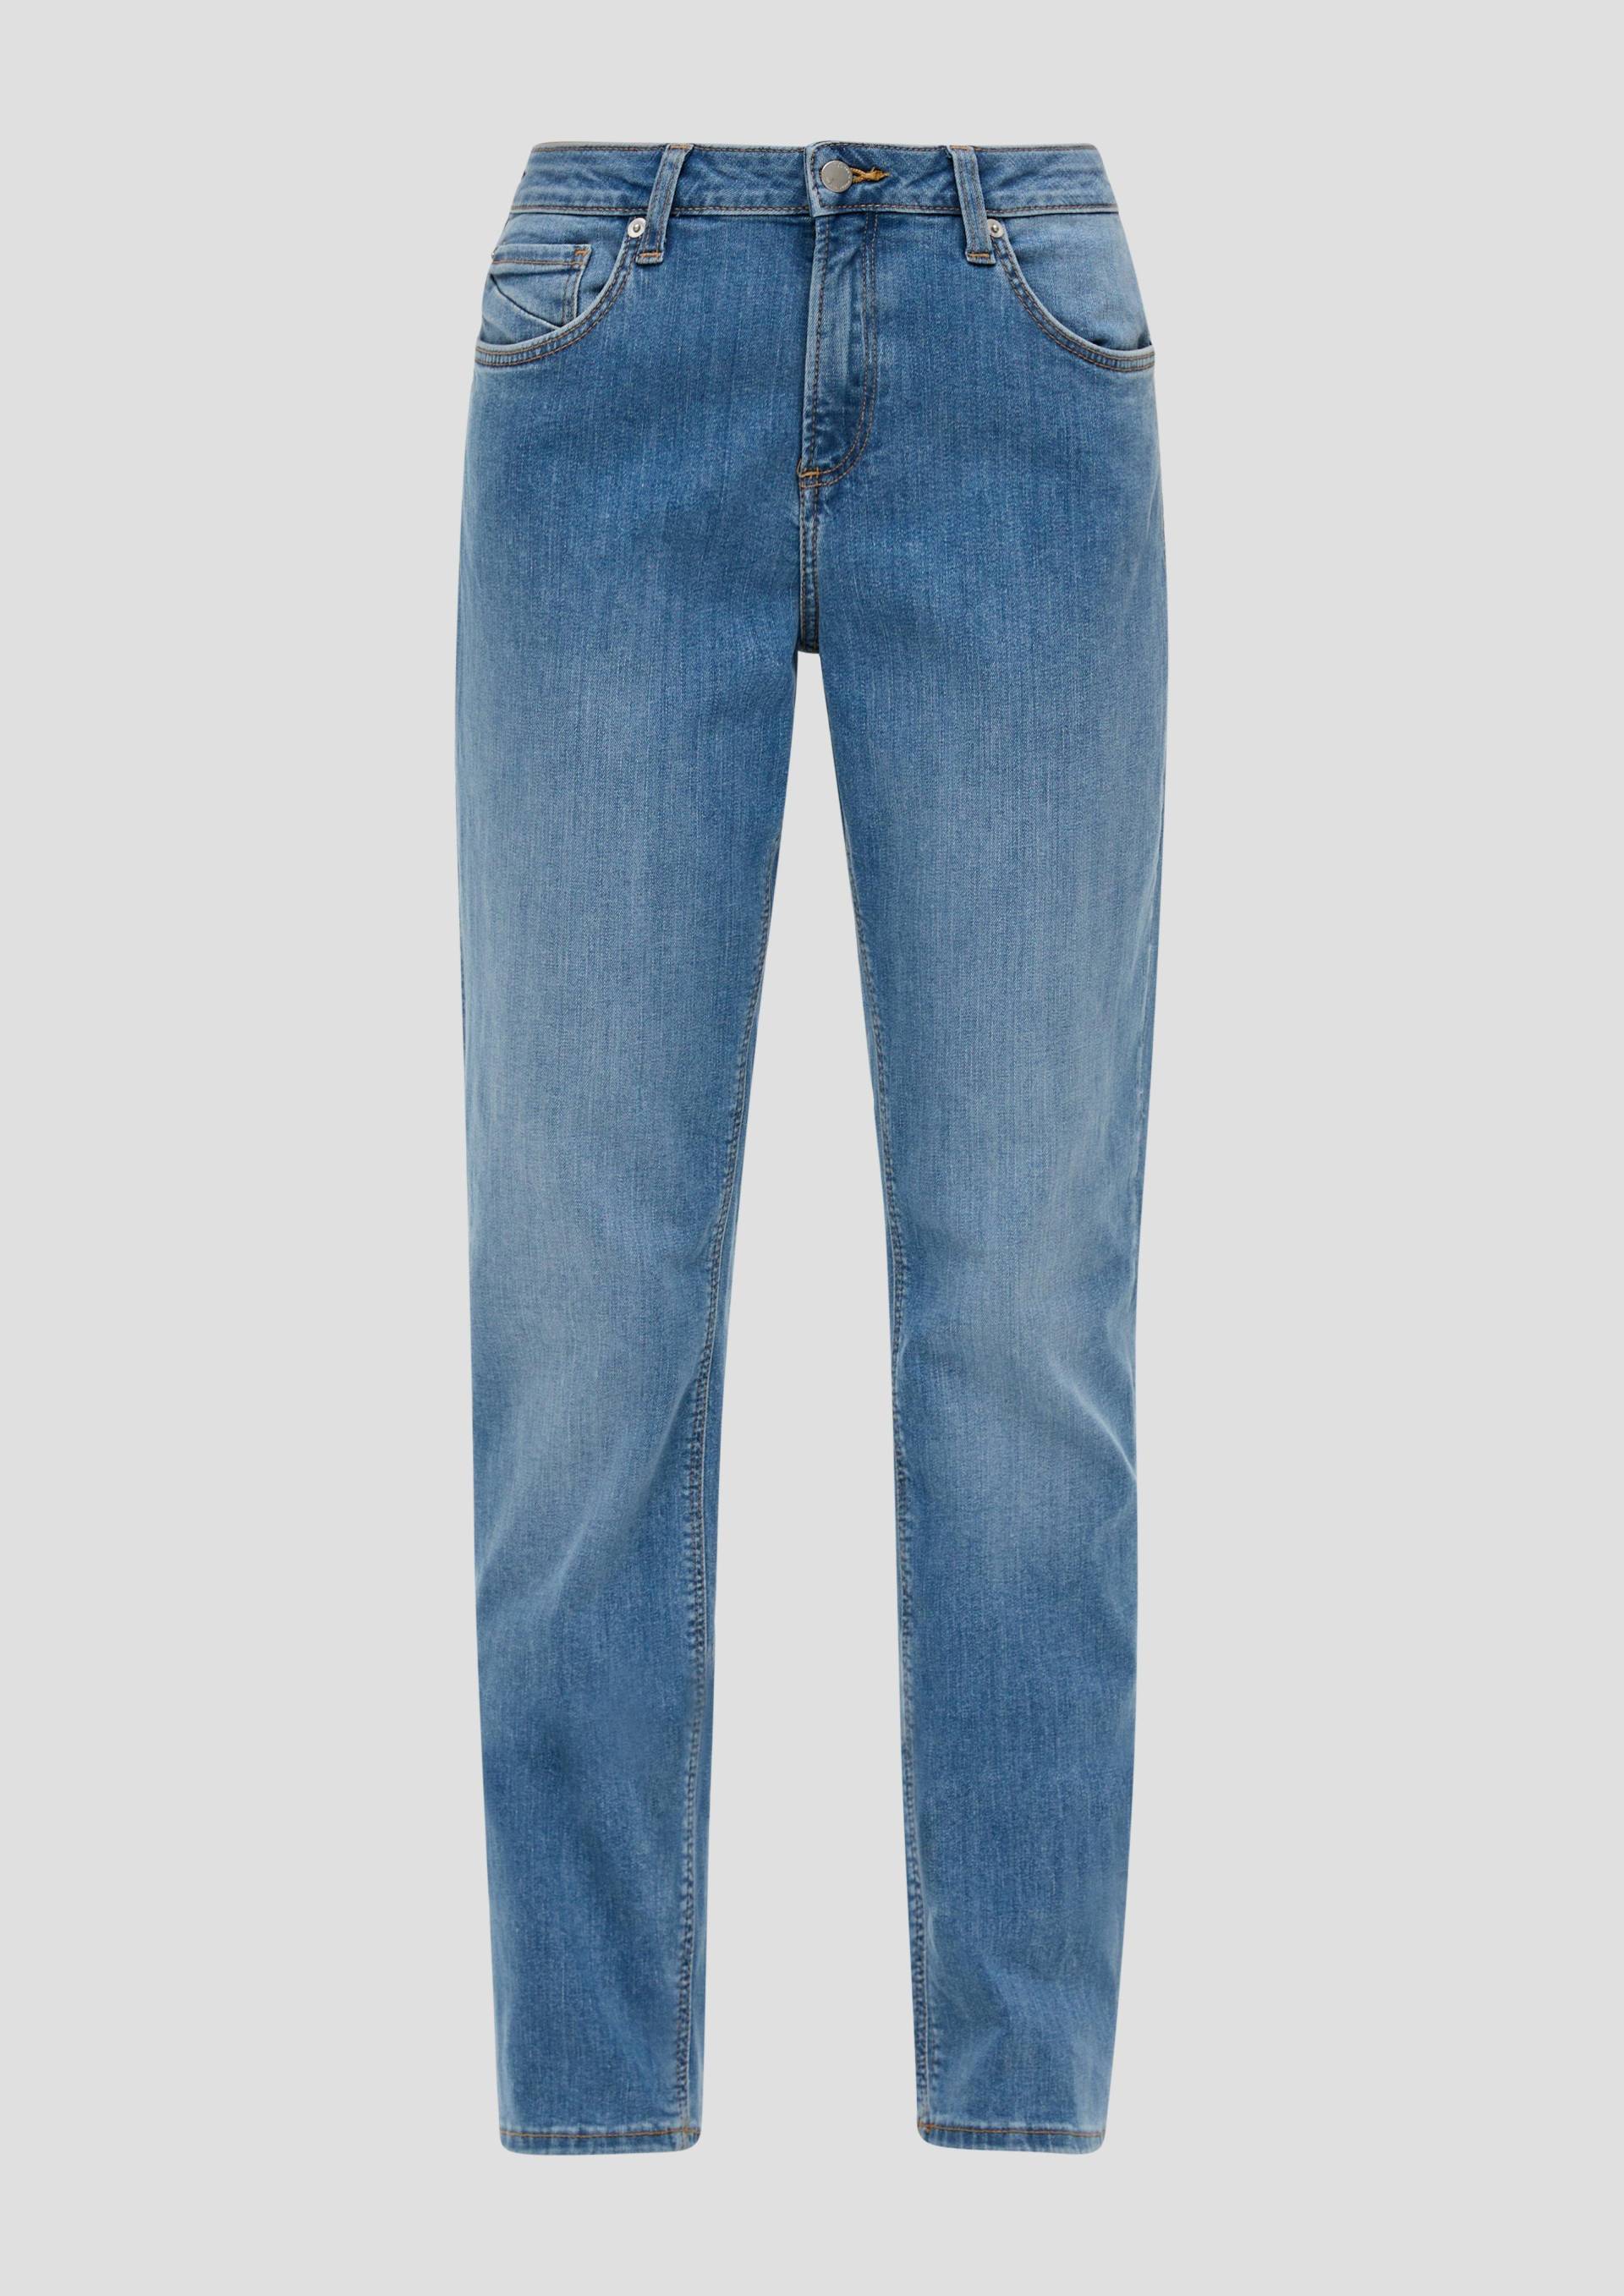 QS - Jeans Catie / Mid Rise / Straight Leg, Damen, blau von QS